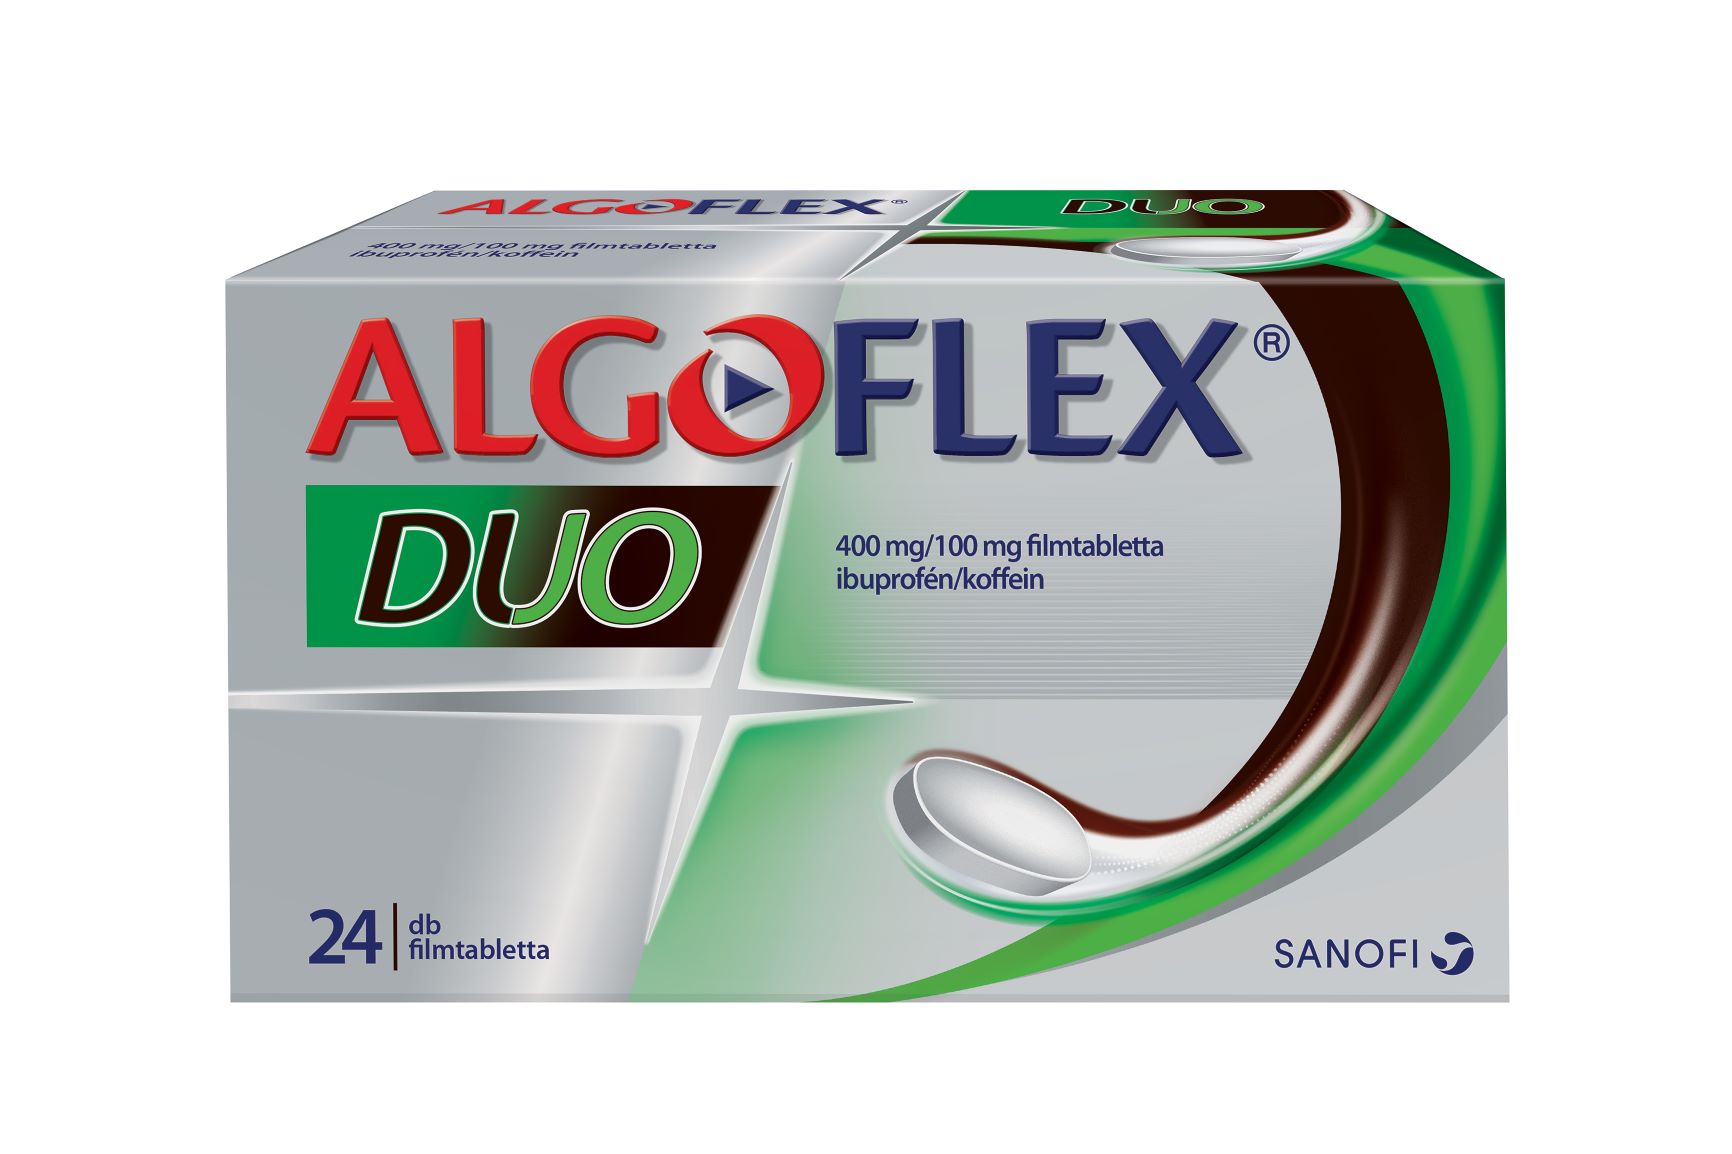 Algoflex Duo 400mg/100mg filmtabletta